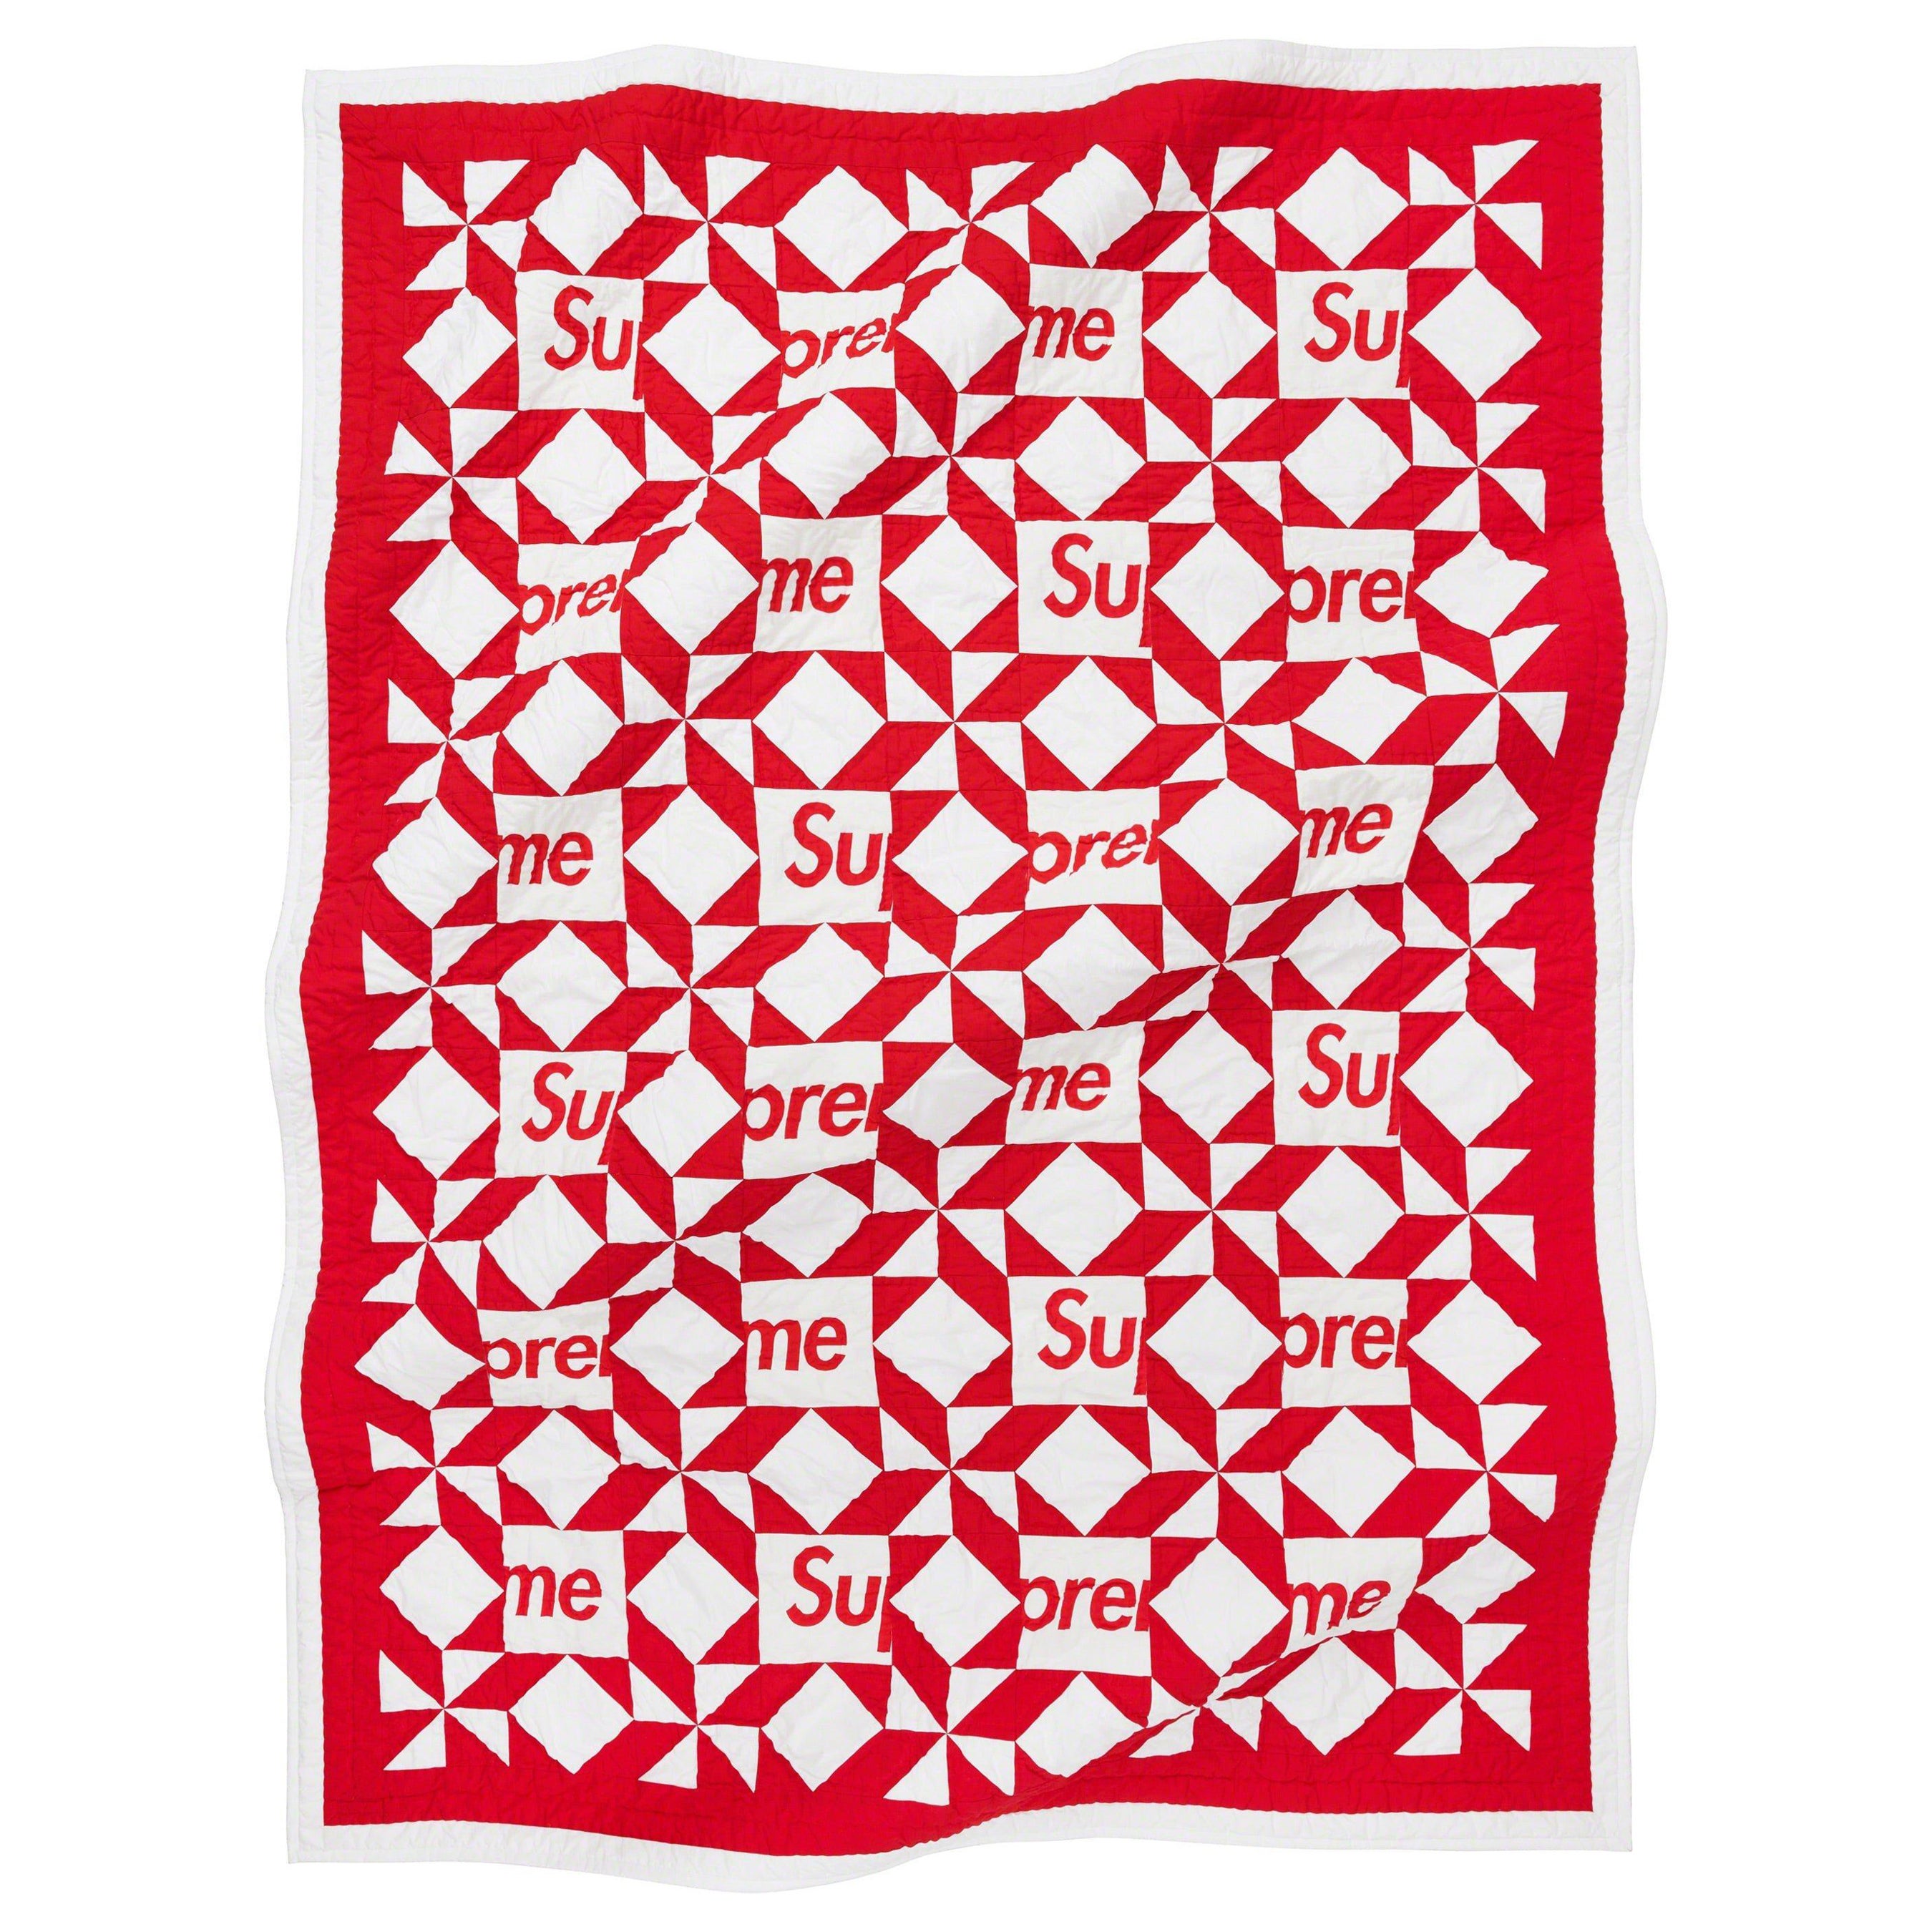 Lv supreme blanket (red)